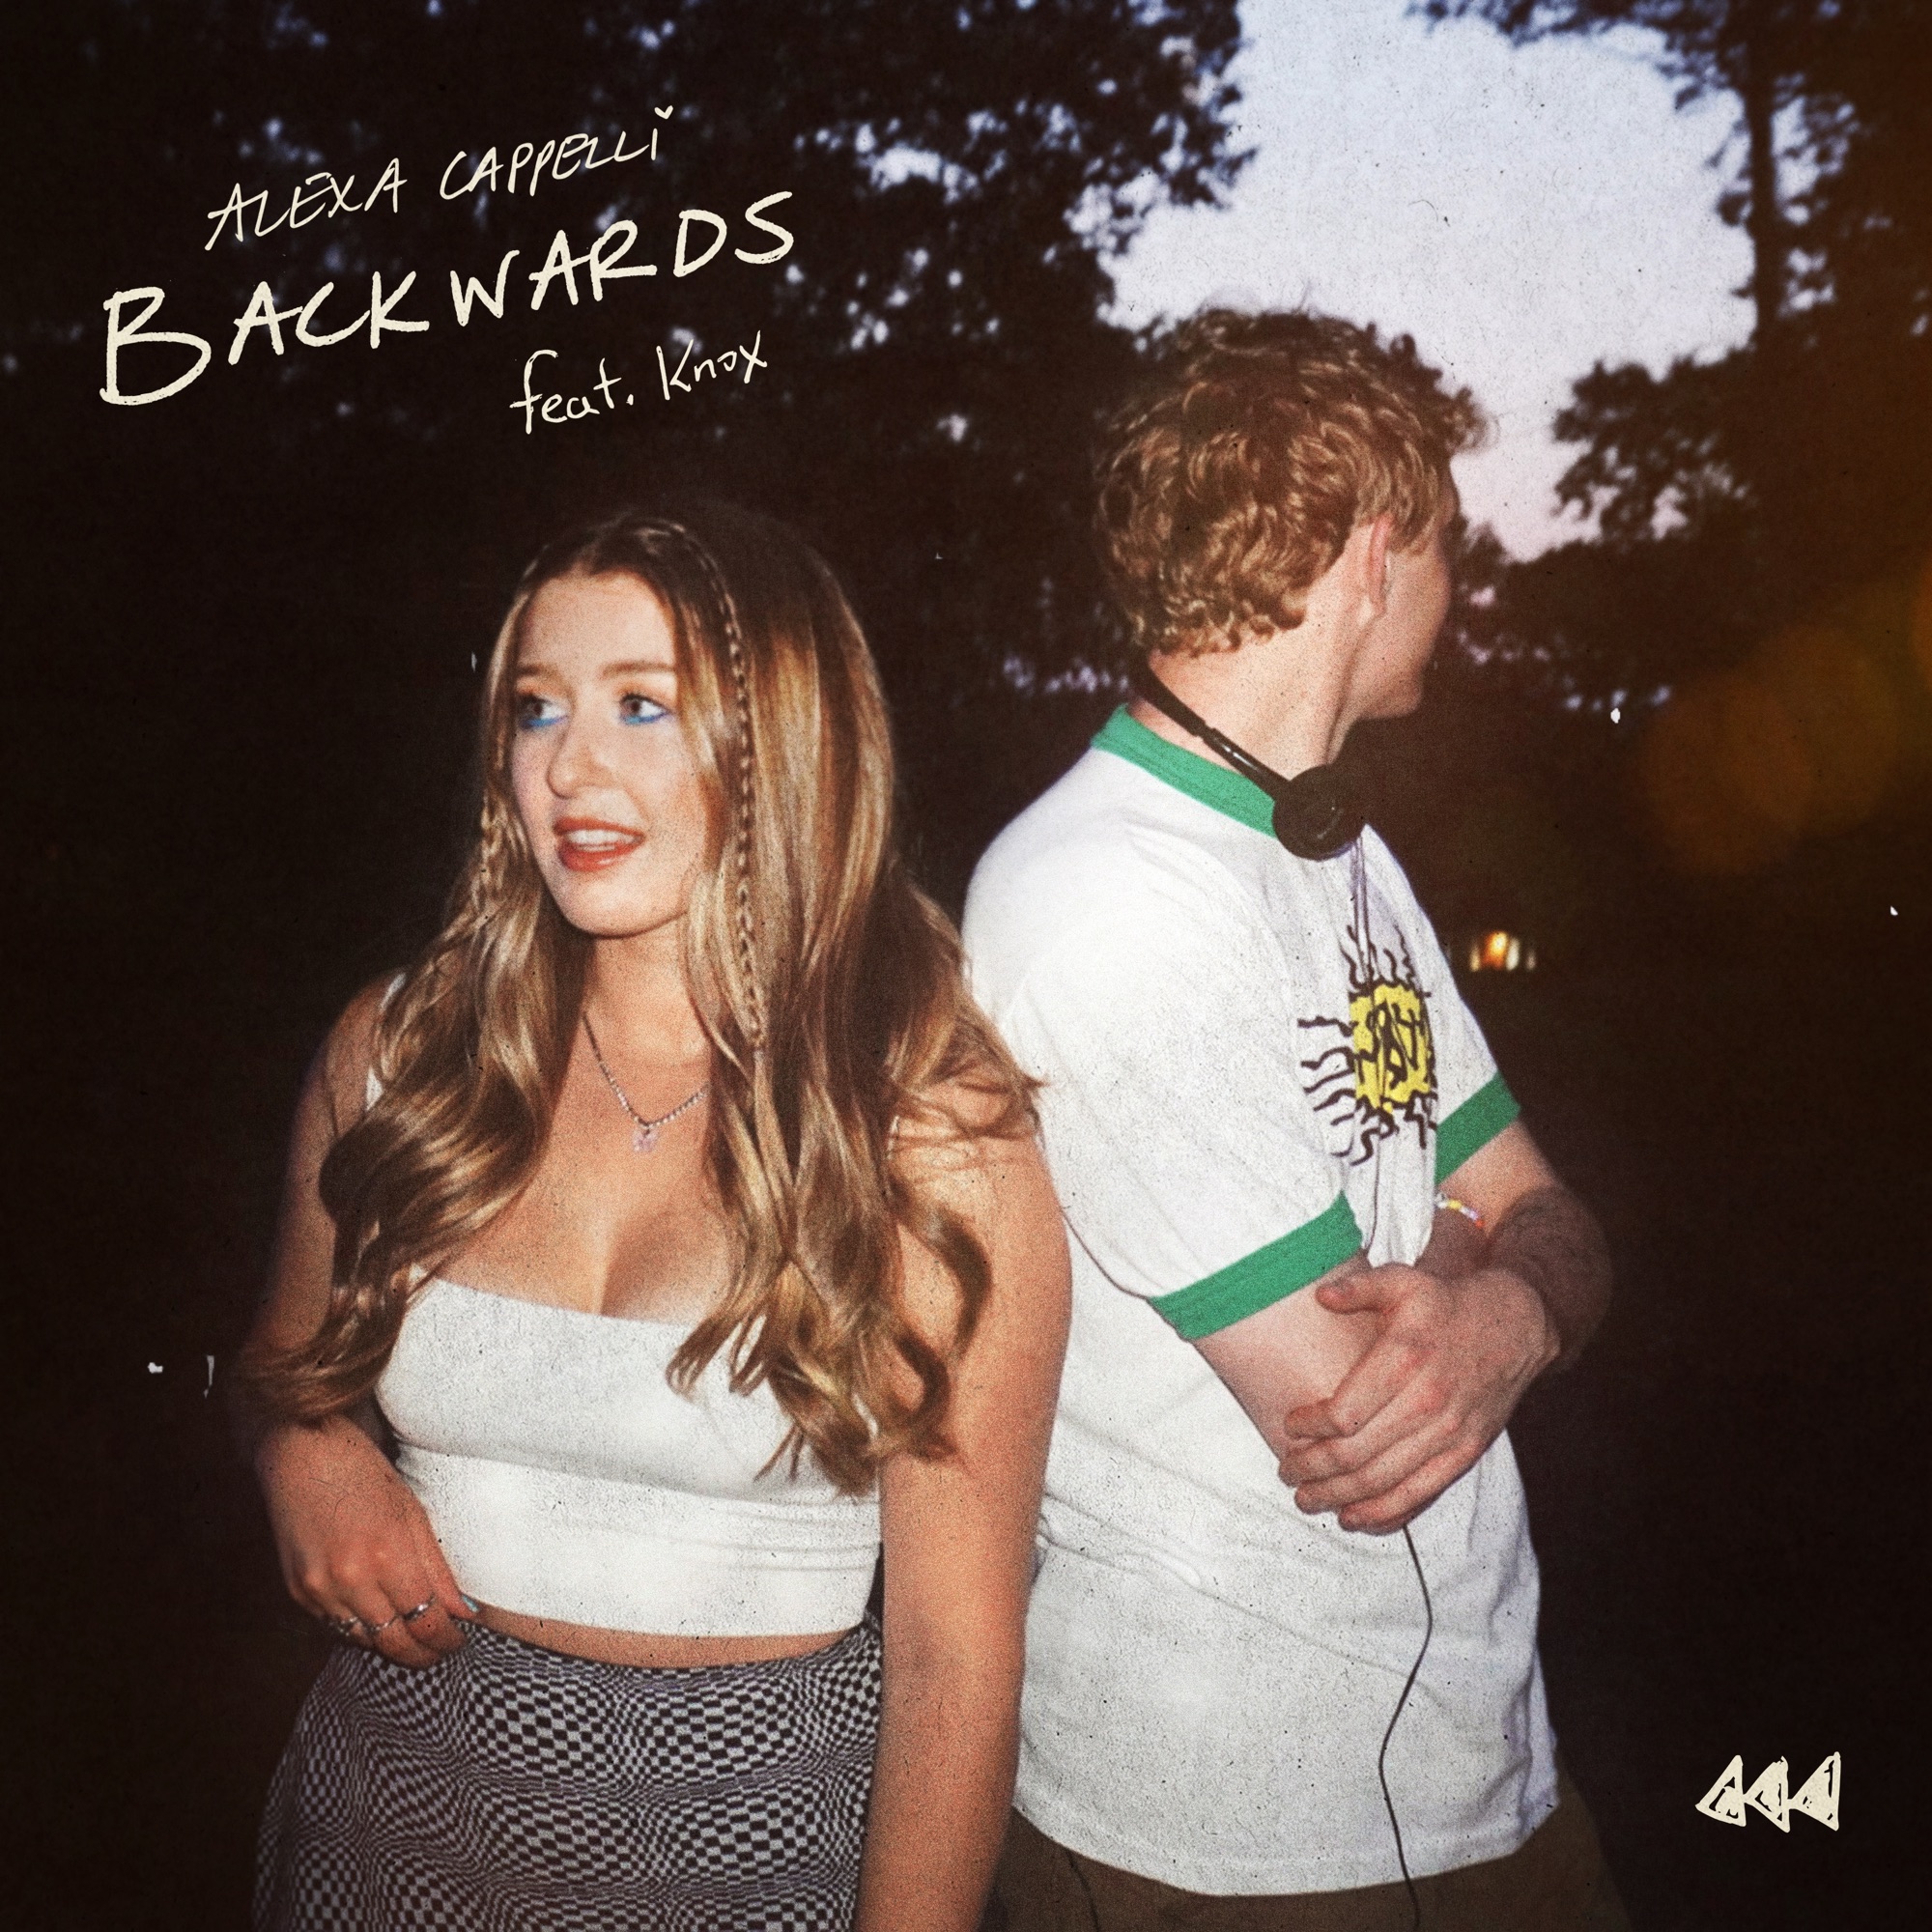 Alexa Cappelli featuring Knox — Backwards cover artwork